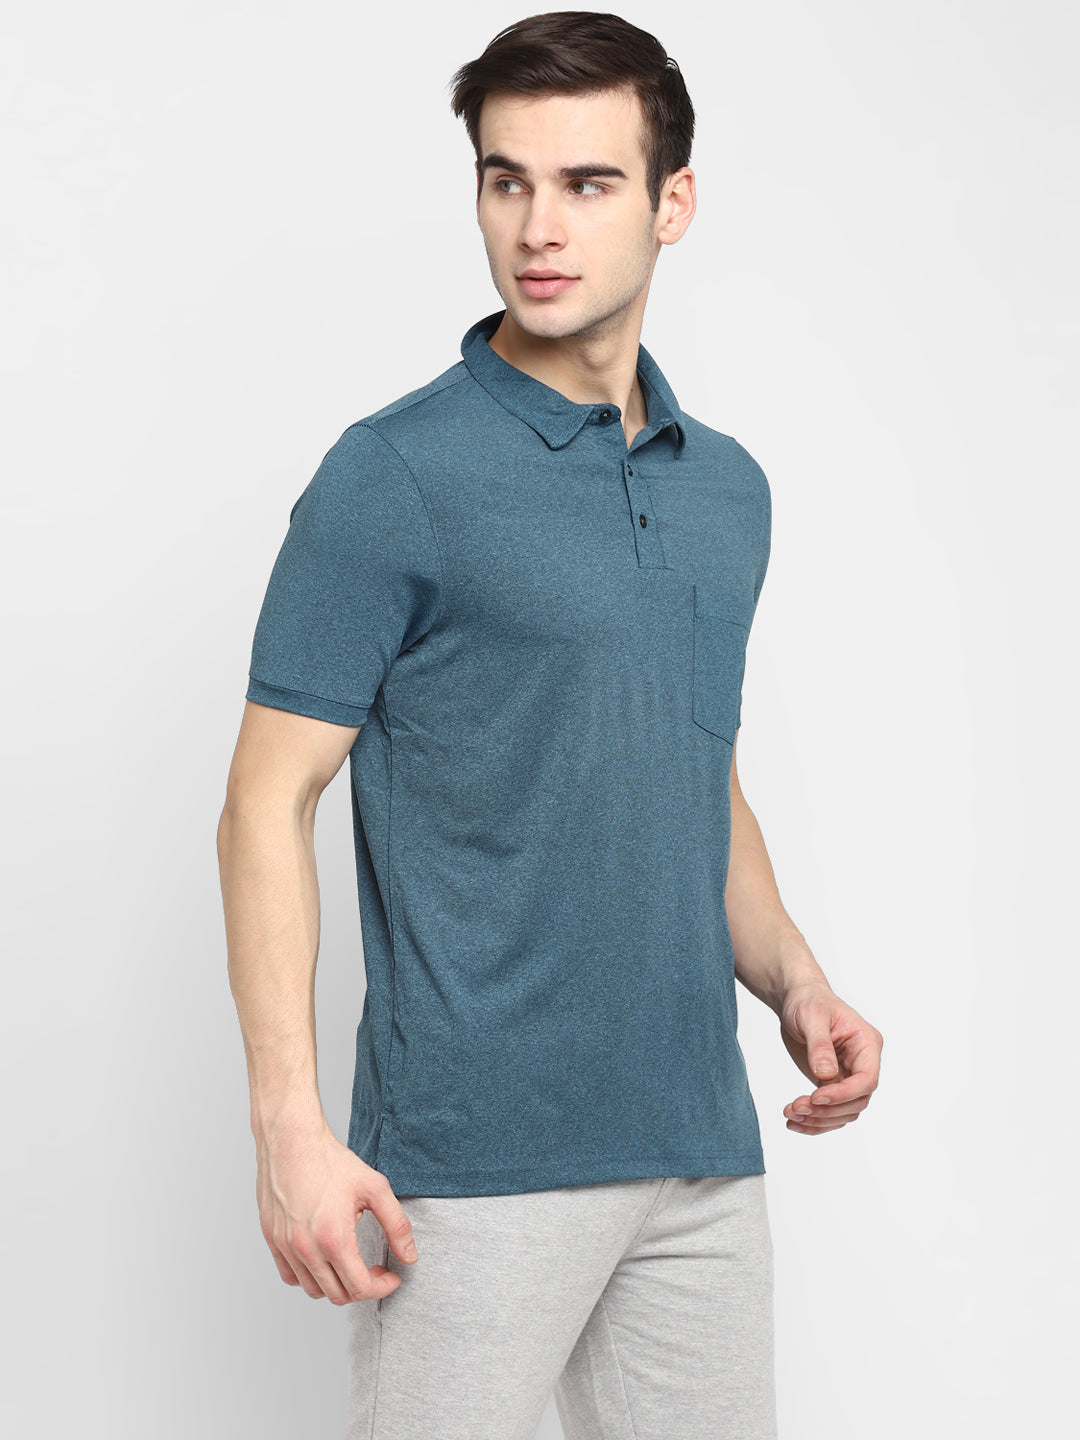 Teal Half Sleeve Polo T-Shirt for Men